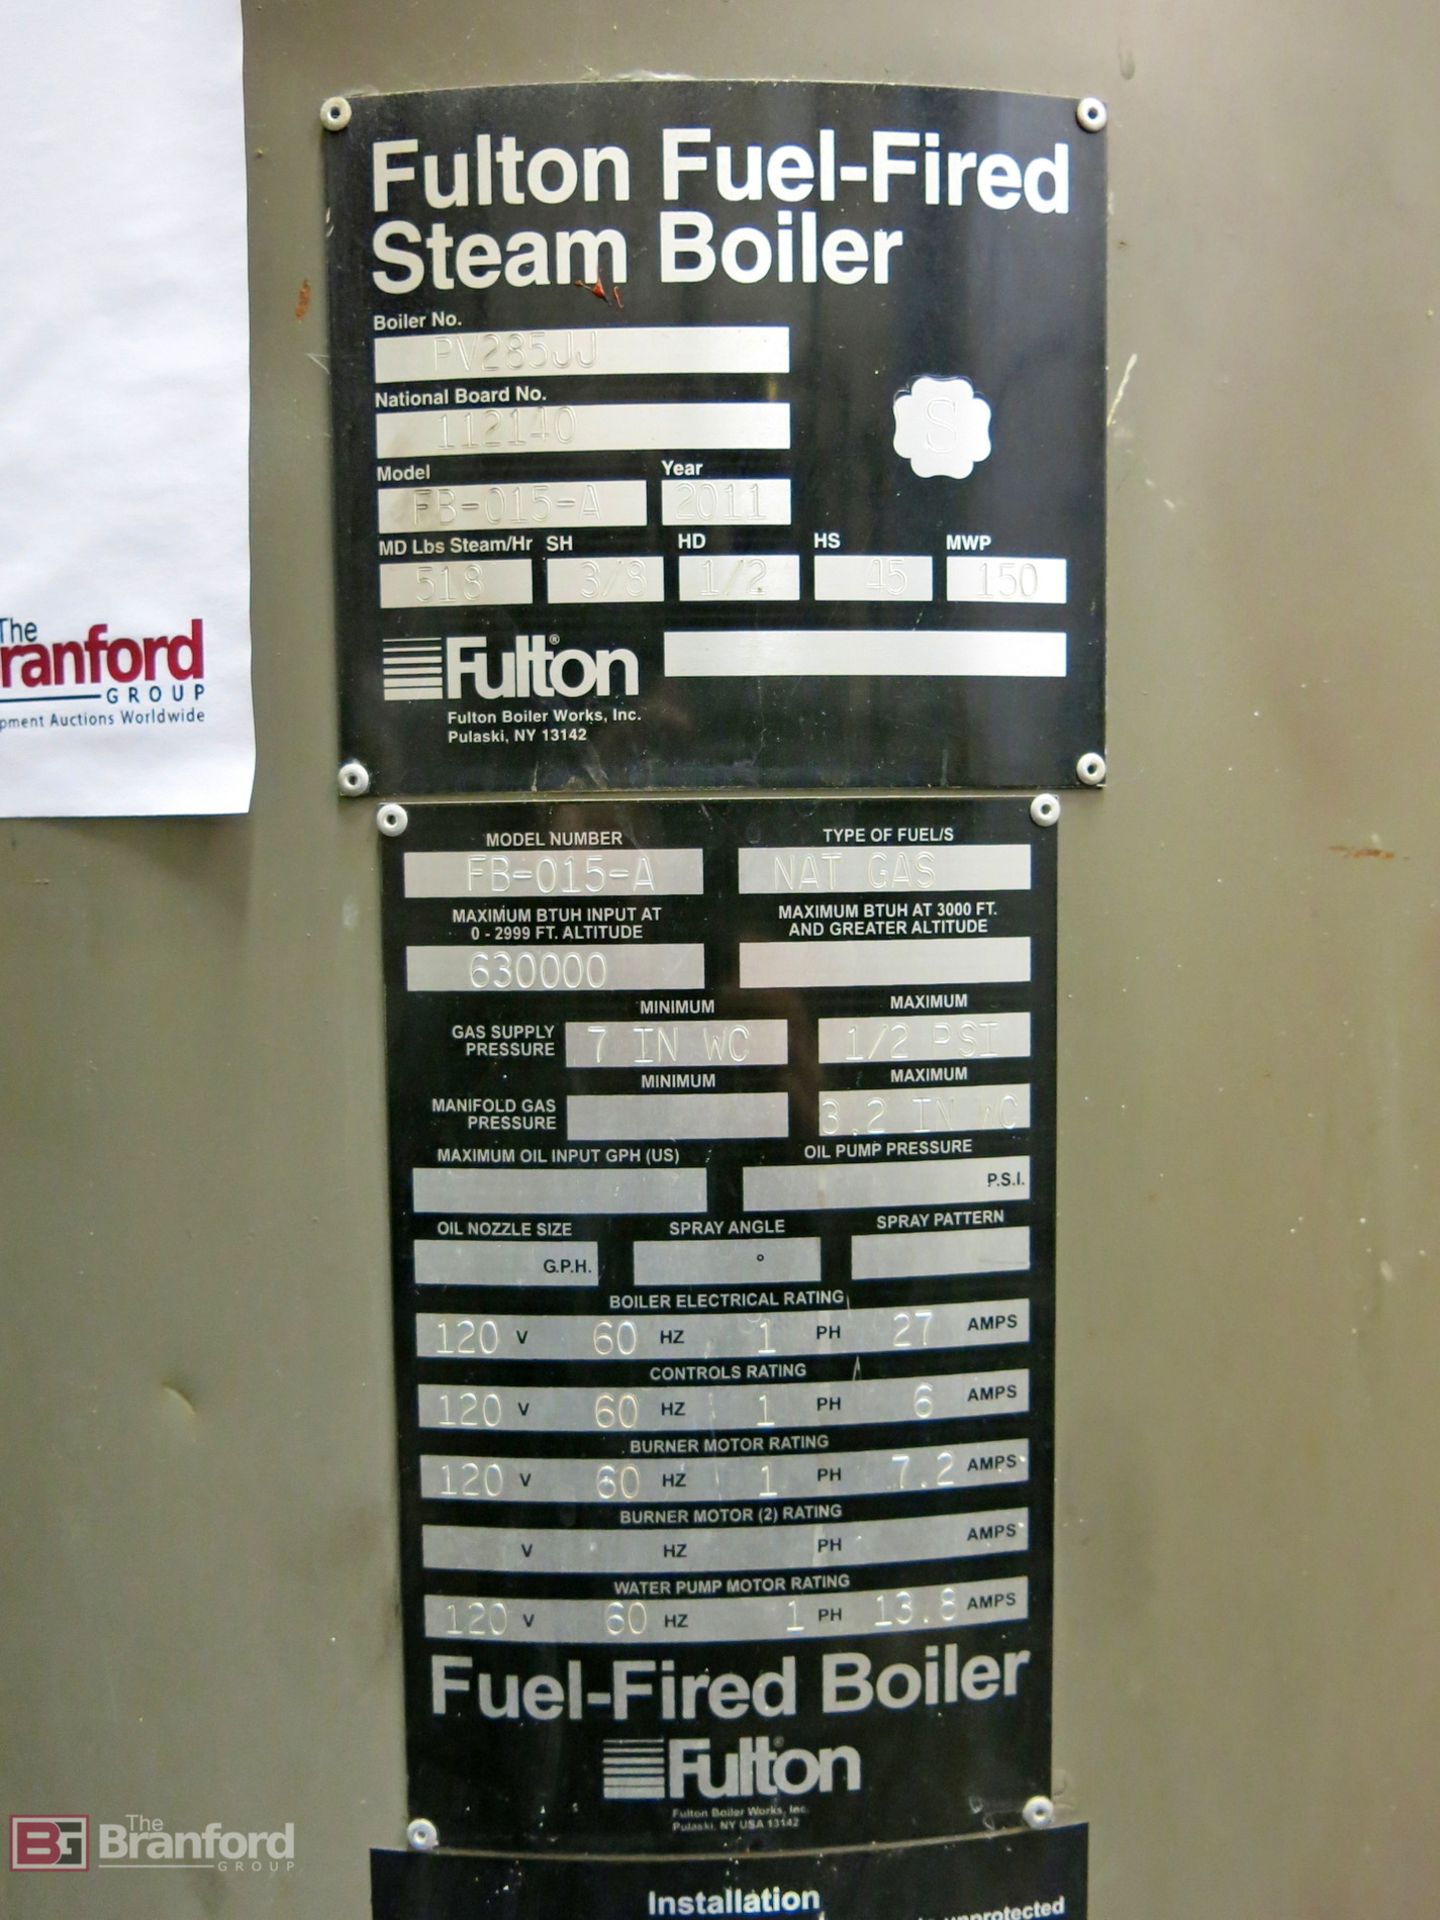 Fulton model FB-015-A natural gas steam boiler - Image 2 of 2